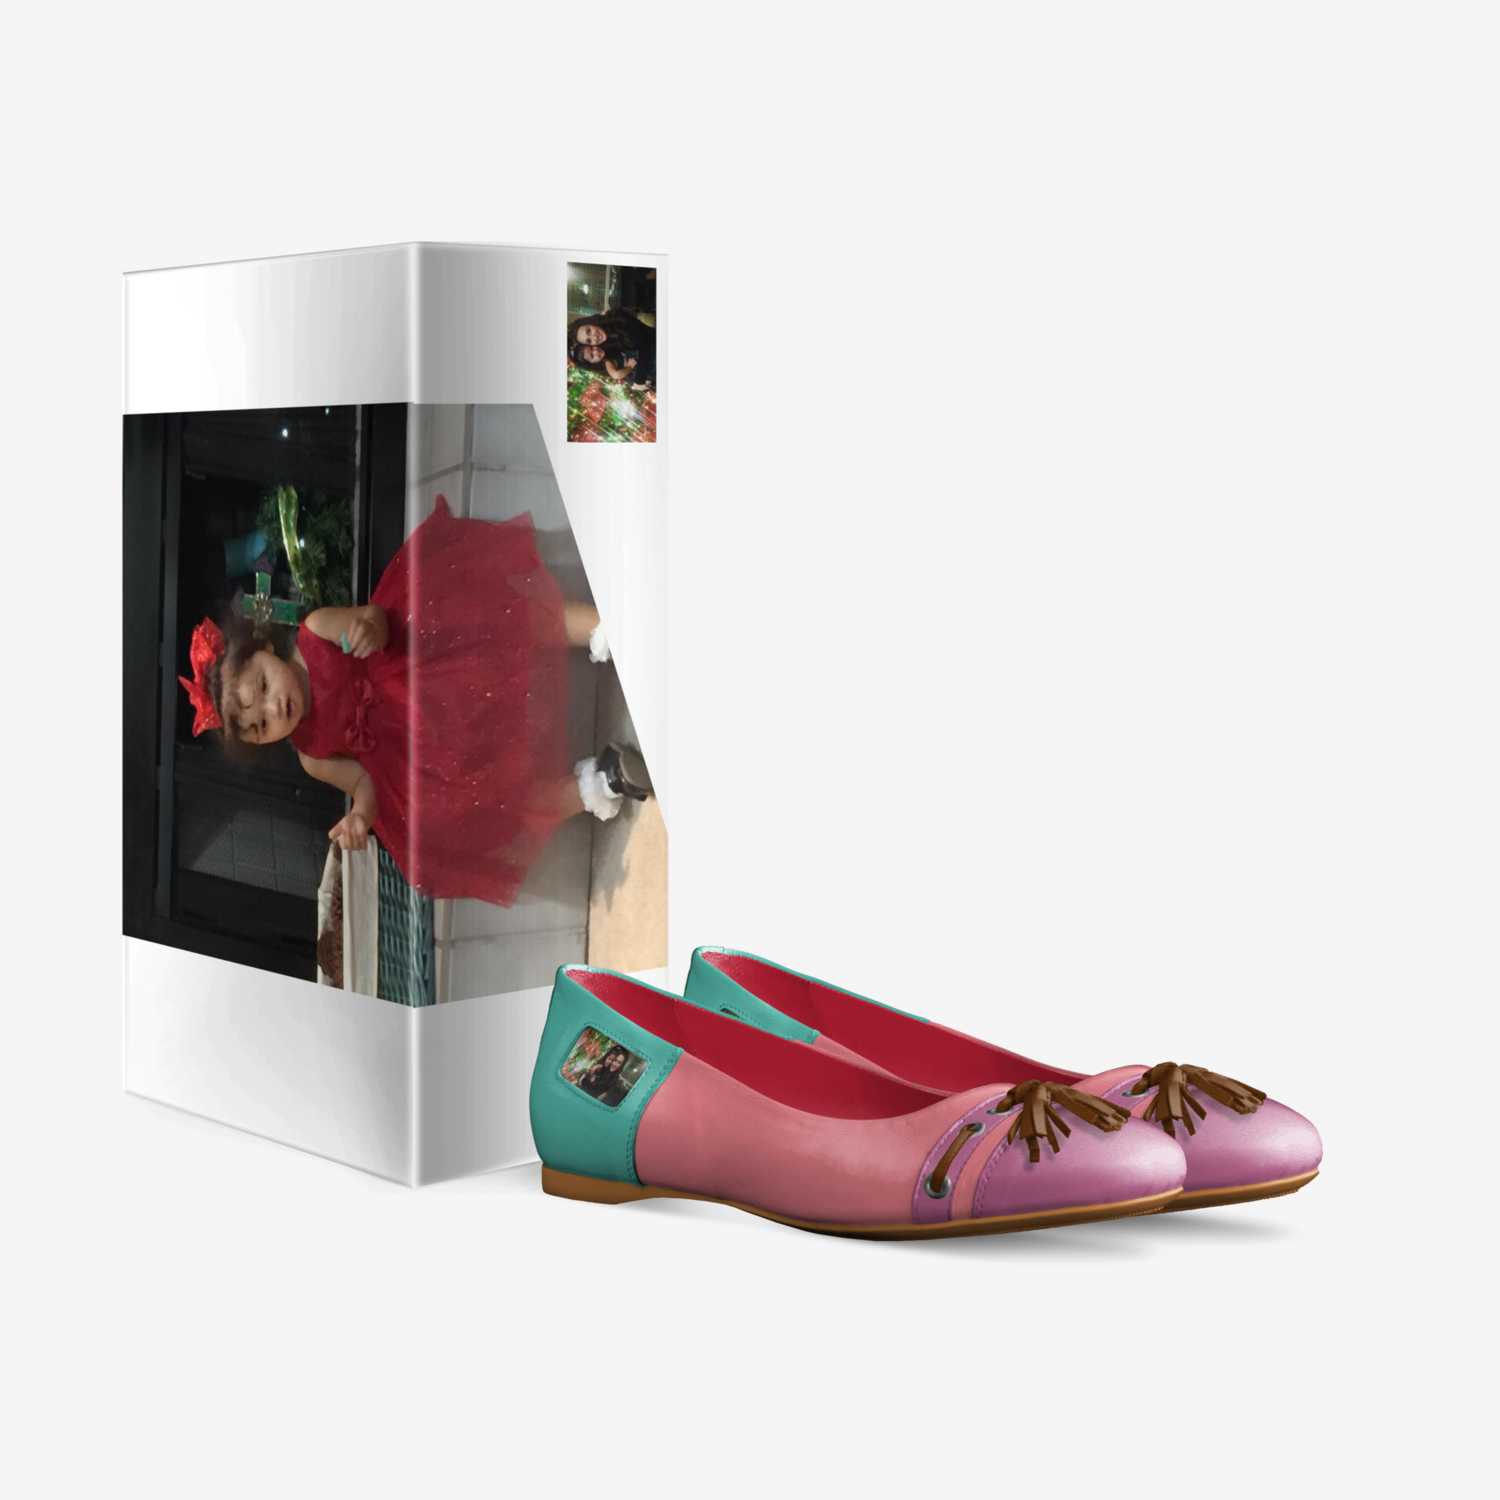 macijojo custom made in Italy shoes by Nicholas | Box view